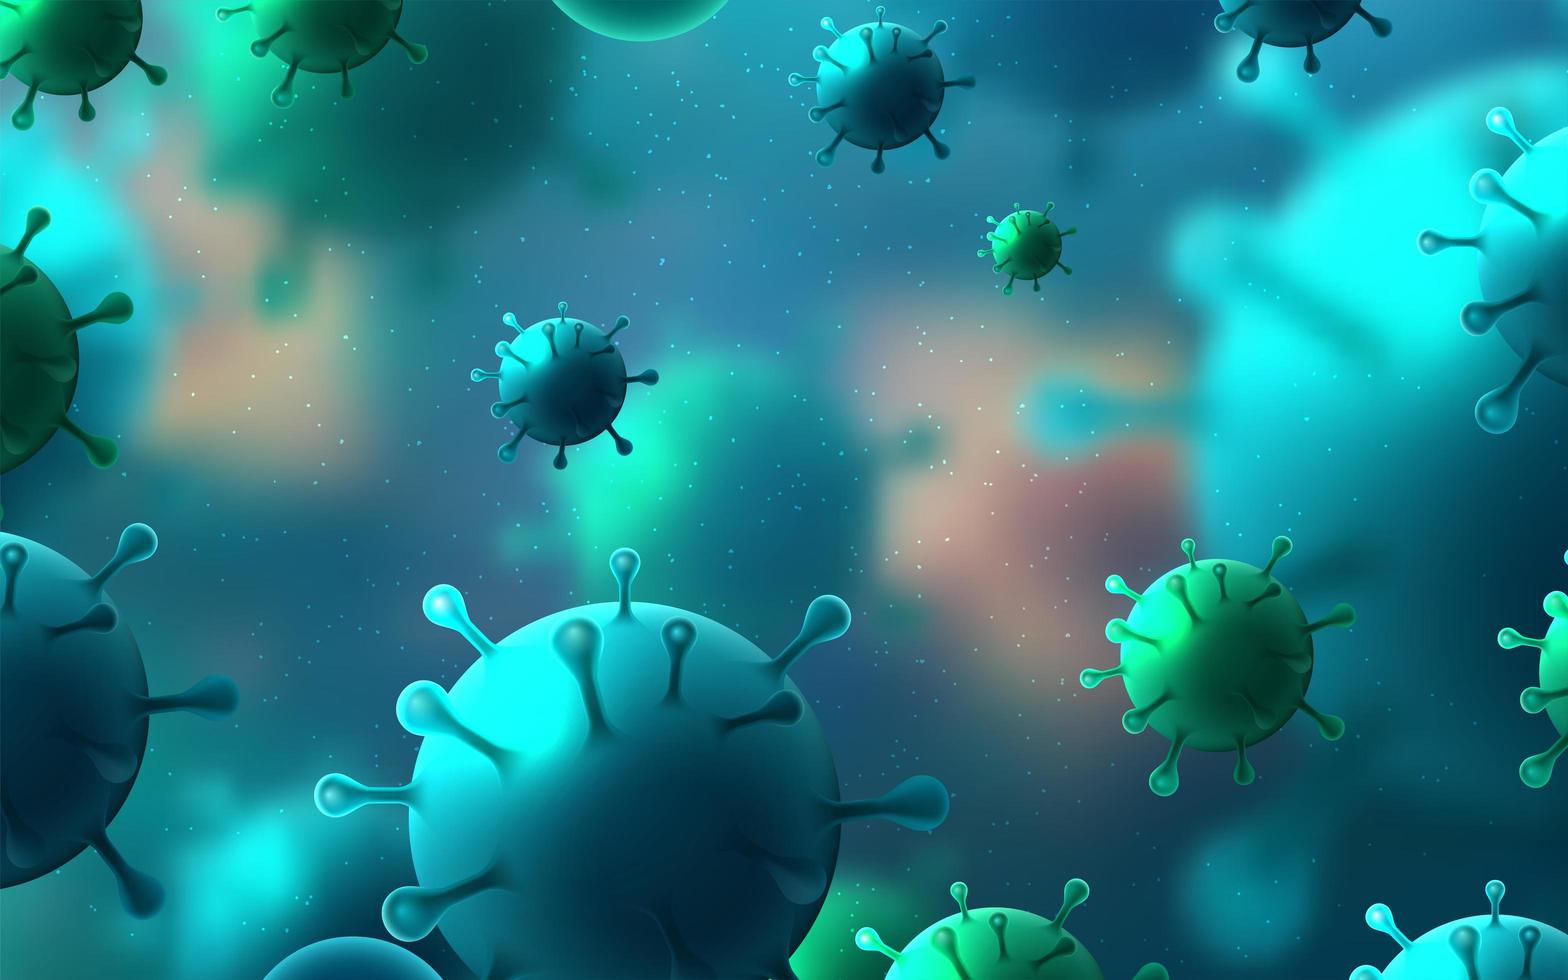 virus 2019-ncov blu e verde vettore